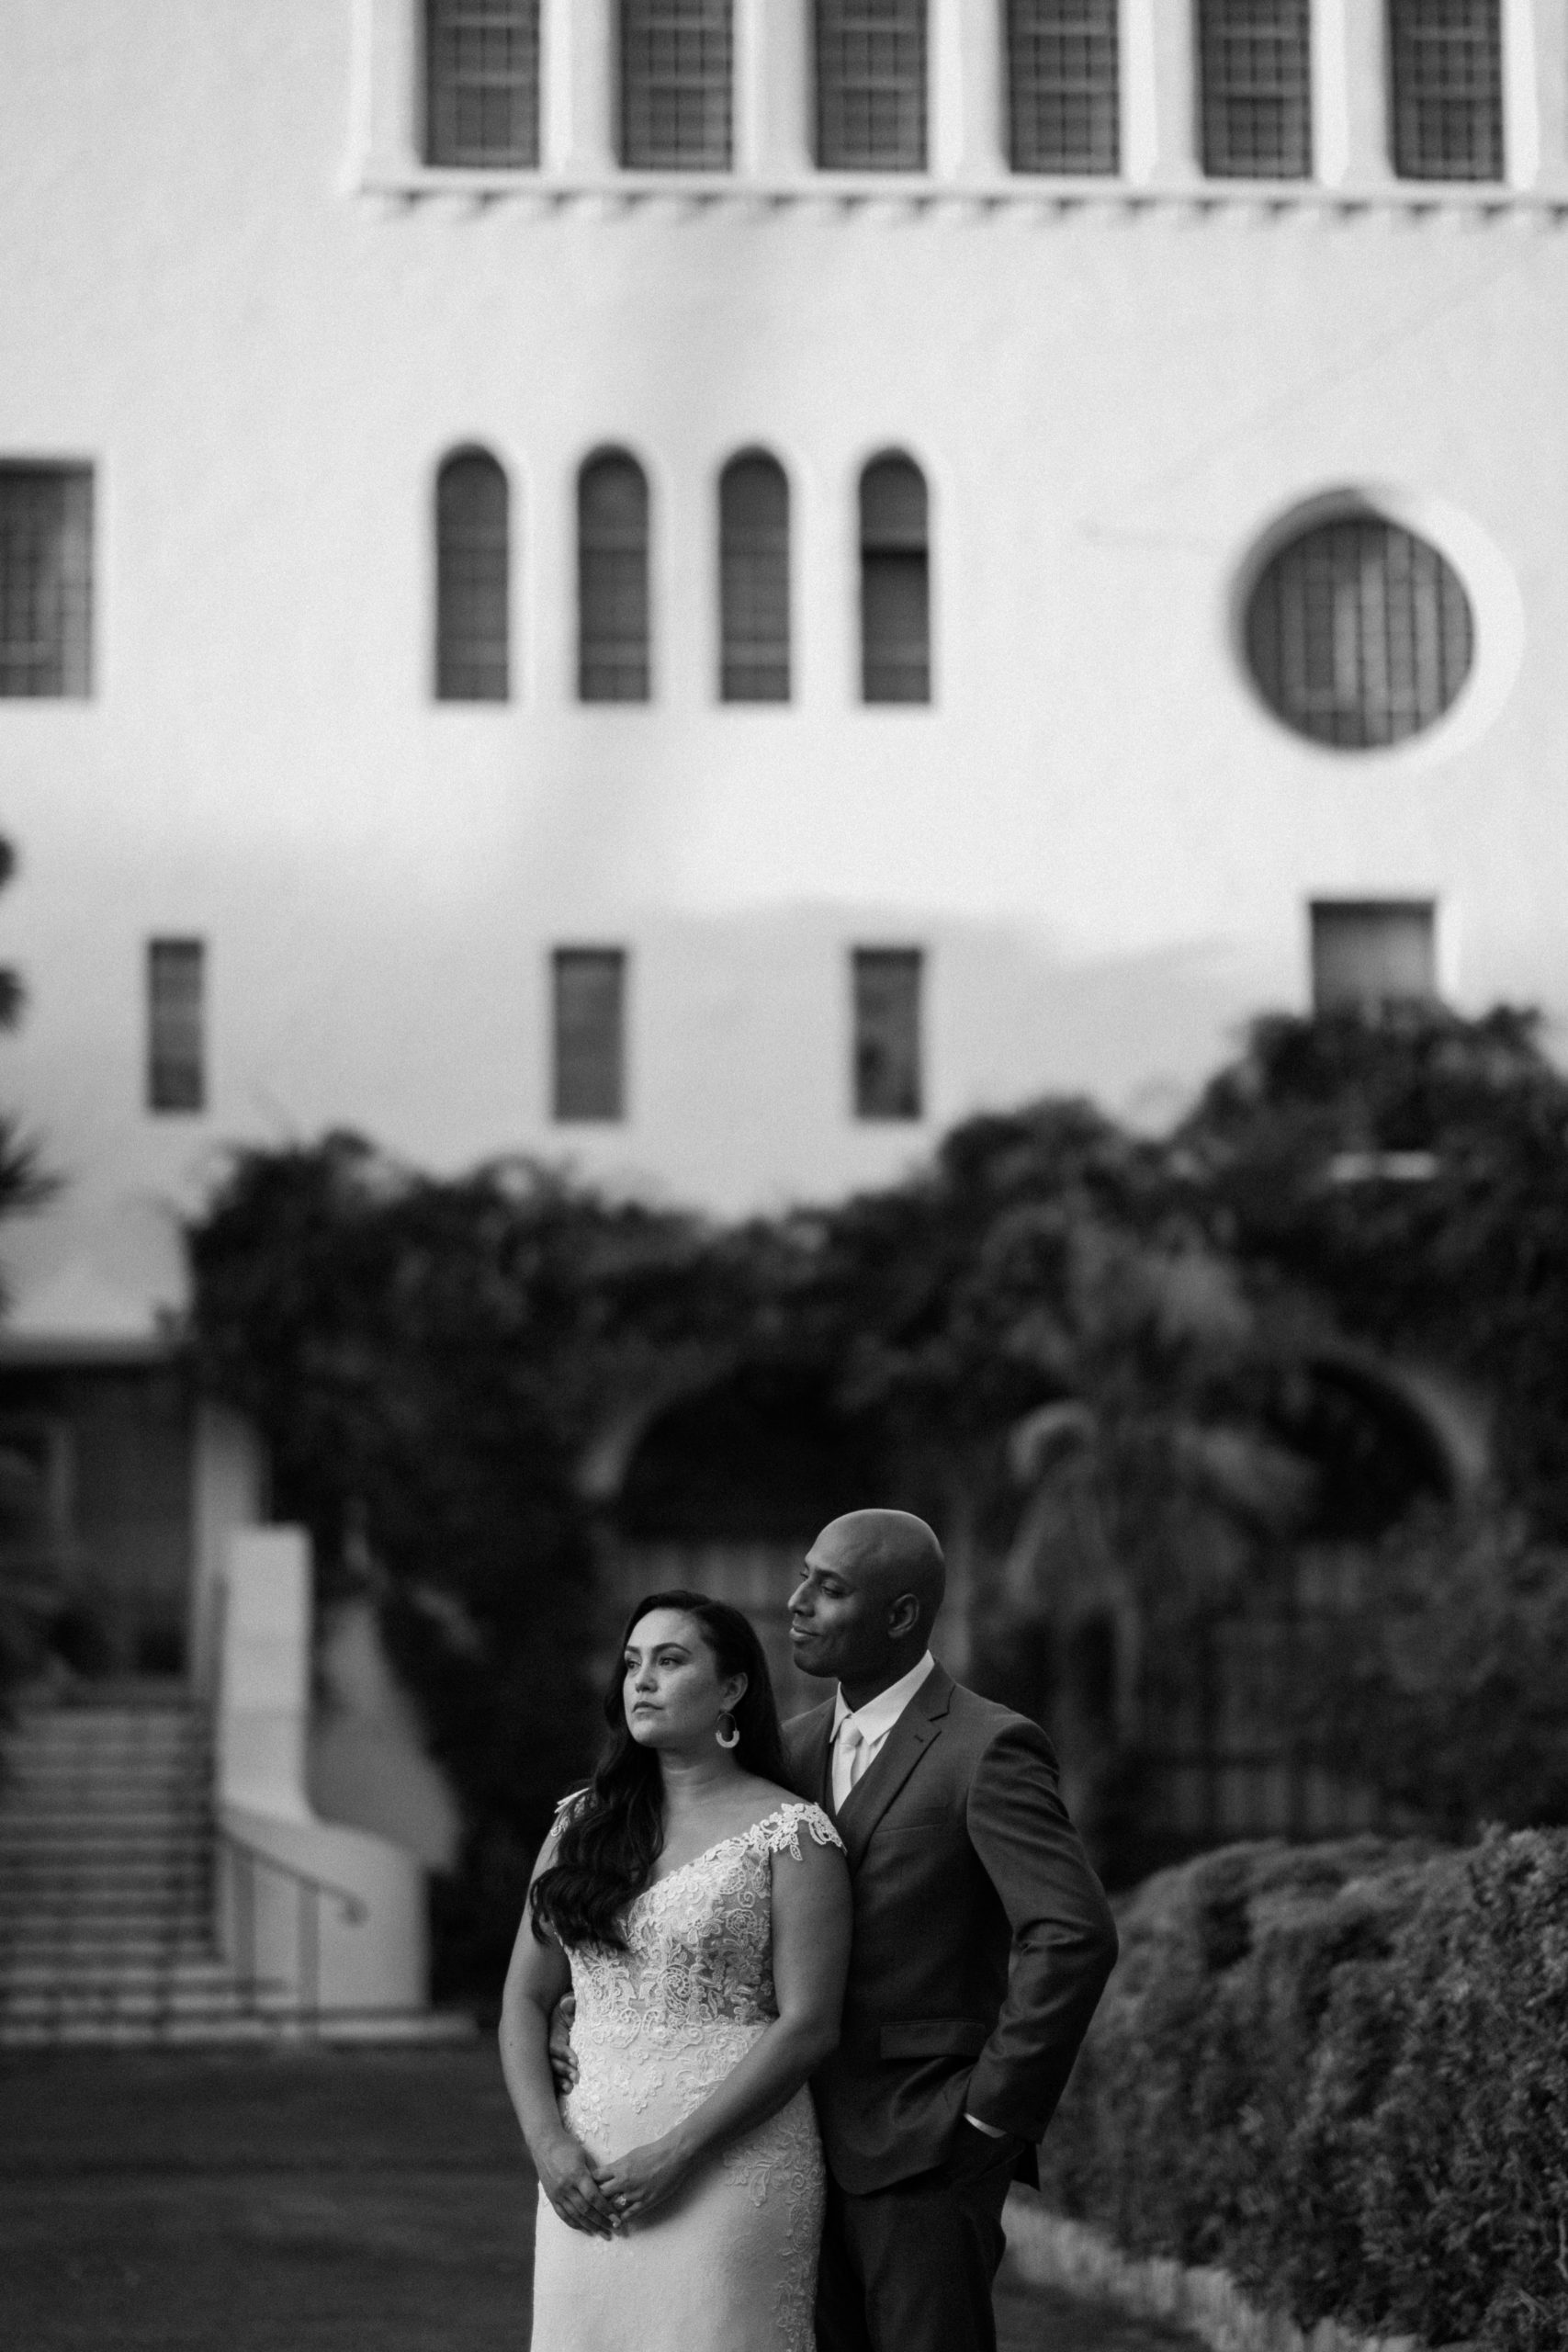 Santa Barbara Courthouse Wedding | Santa Barbara Courthouse Elopement | Elopement Inspiration | Anti-Bride Wedding | Santa Barbara Wedding by Ashley Joyce, 2022